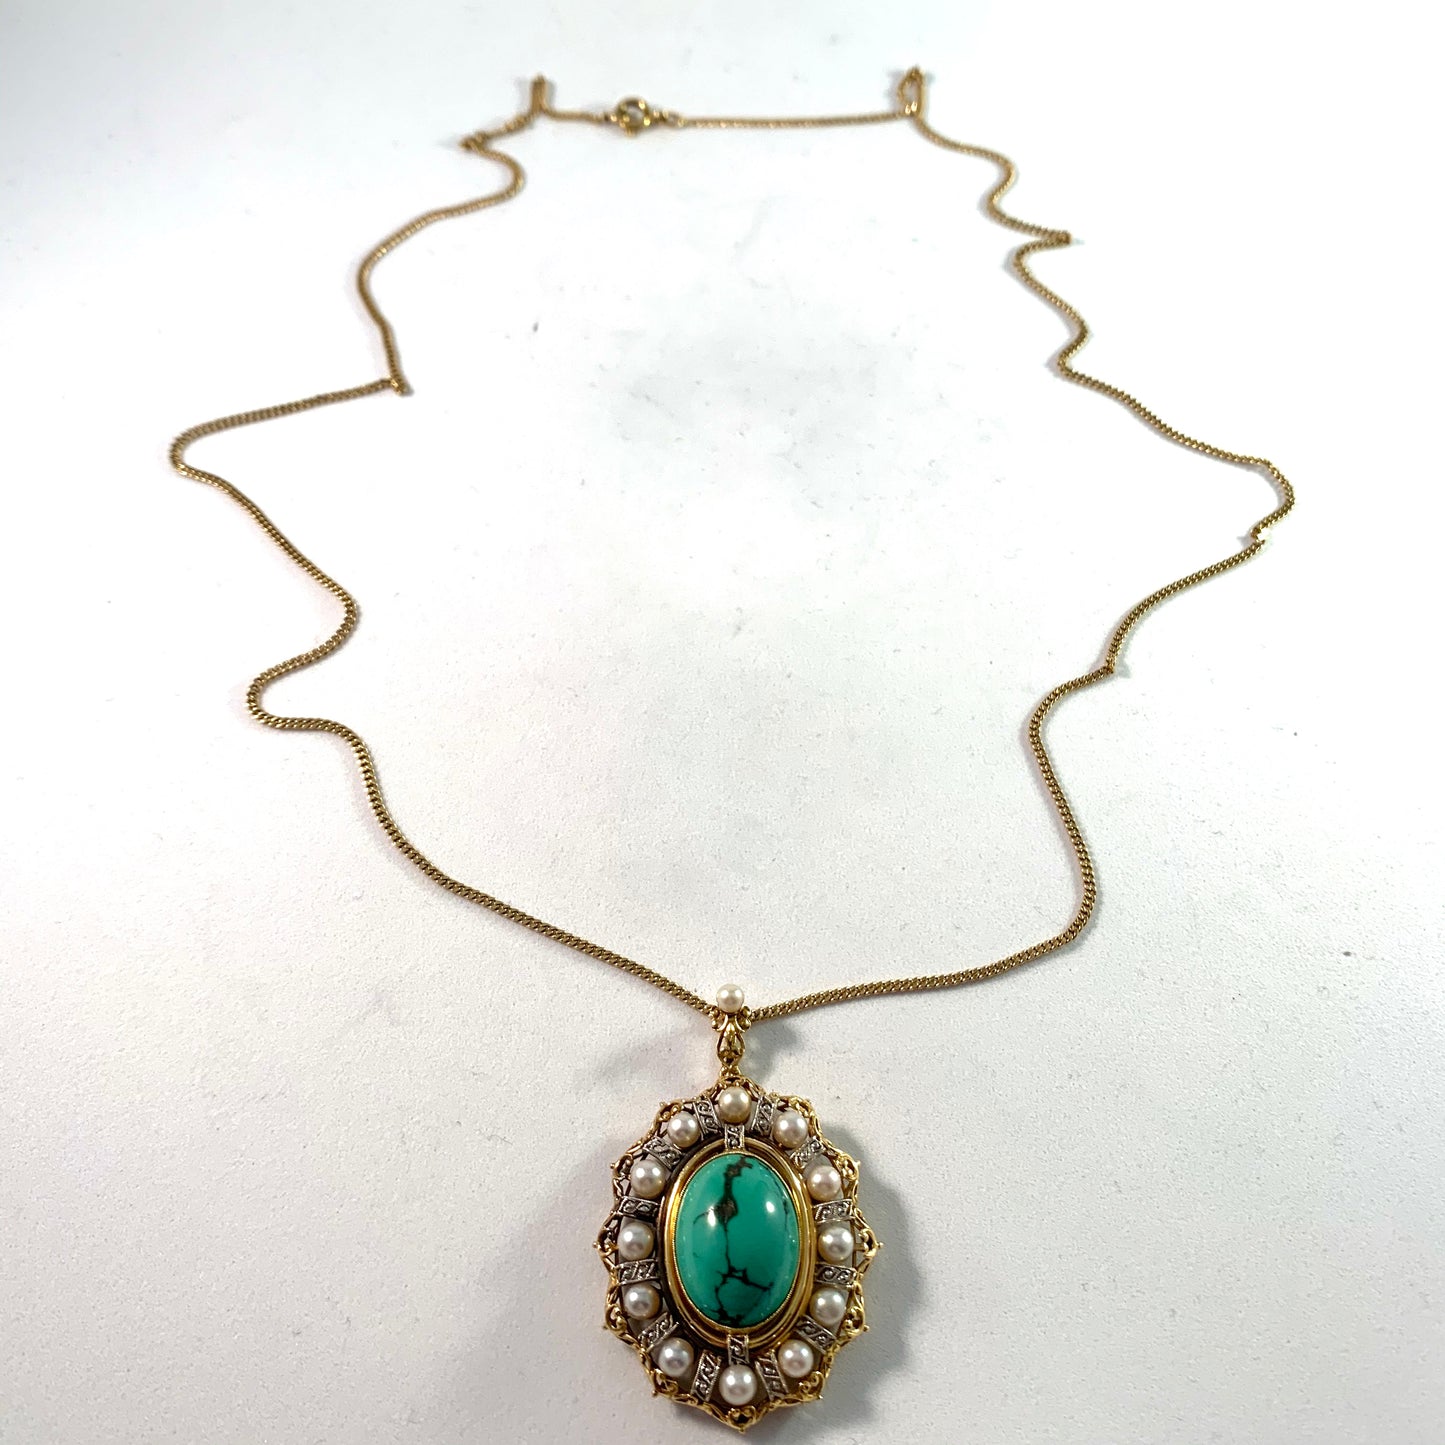 Edwardian 18k Gold Turquoise Pearl Pendant Necklace.